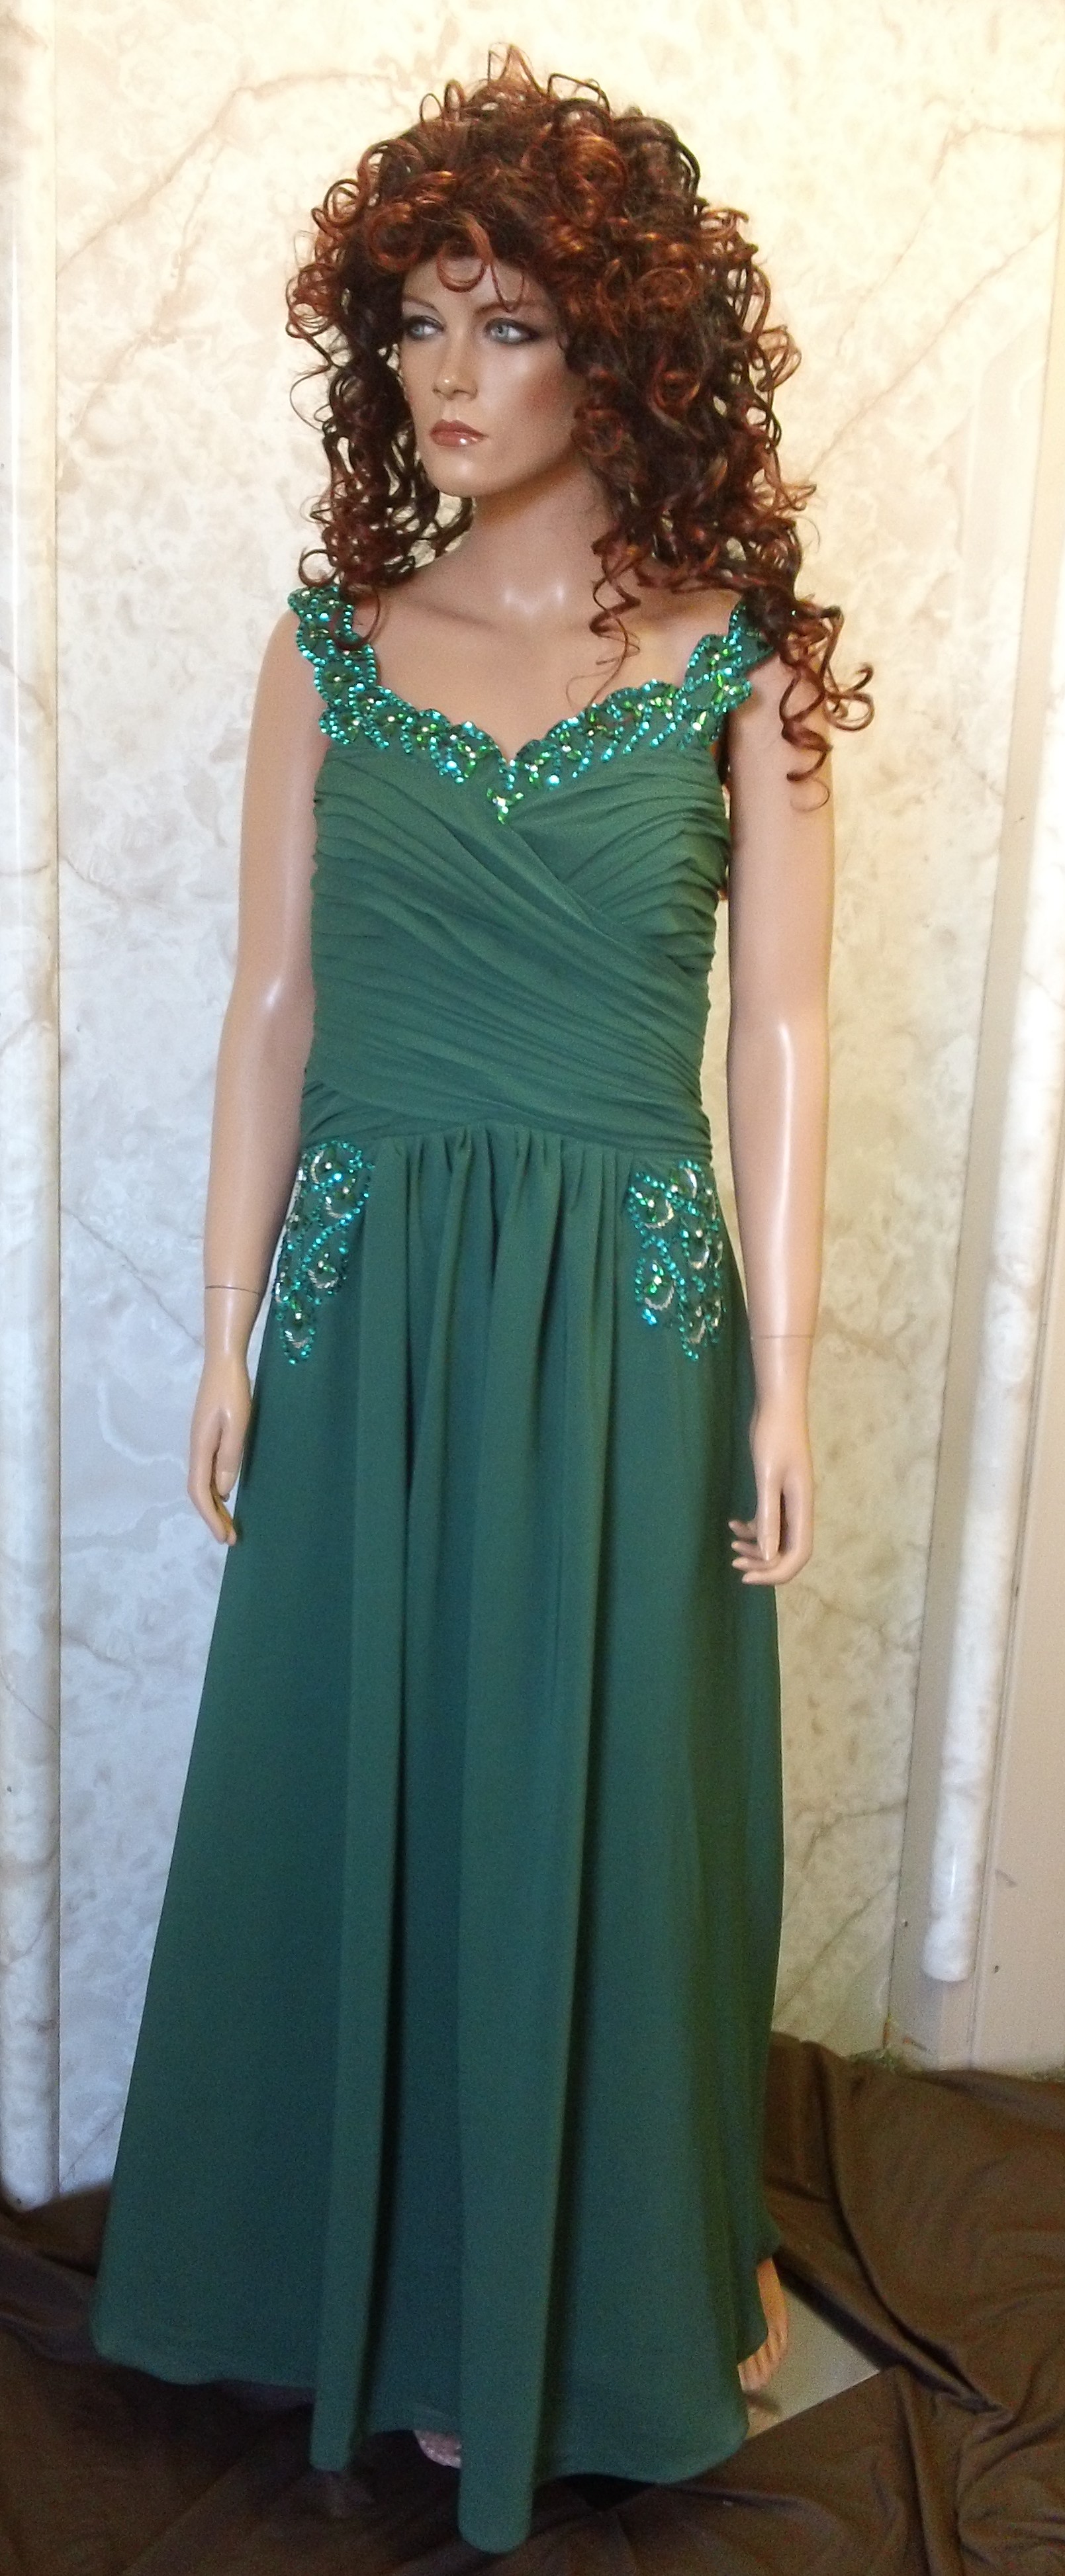 Hunter green bridesmaid dress